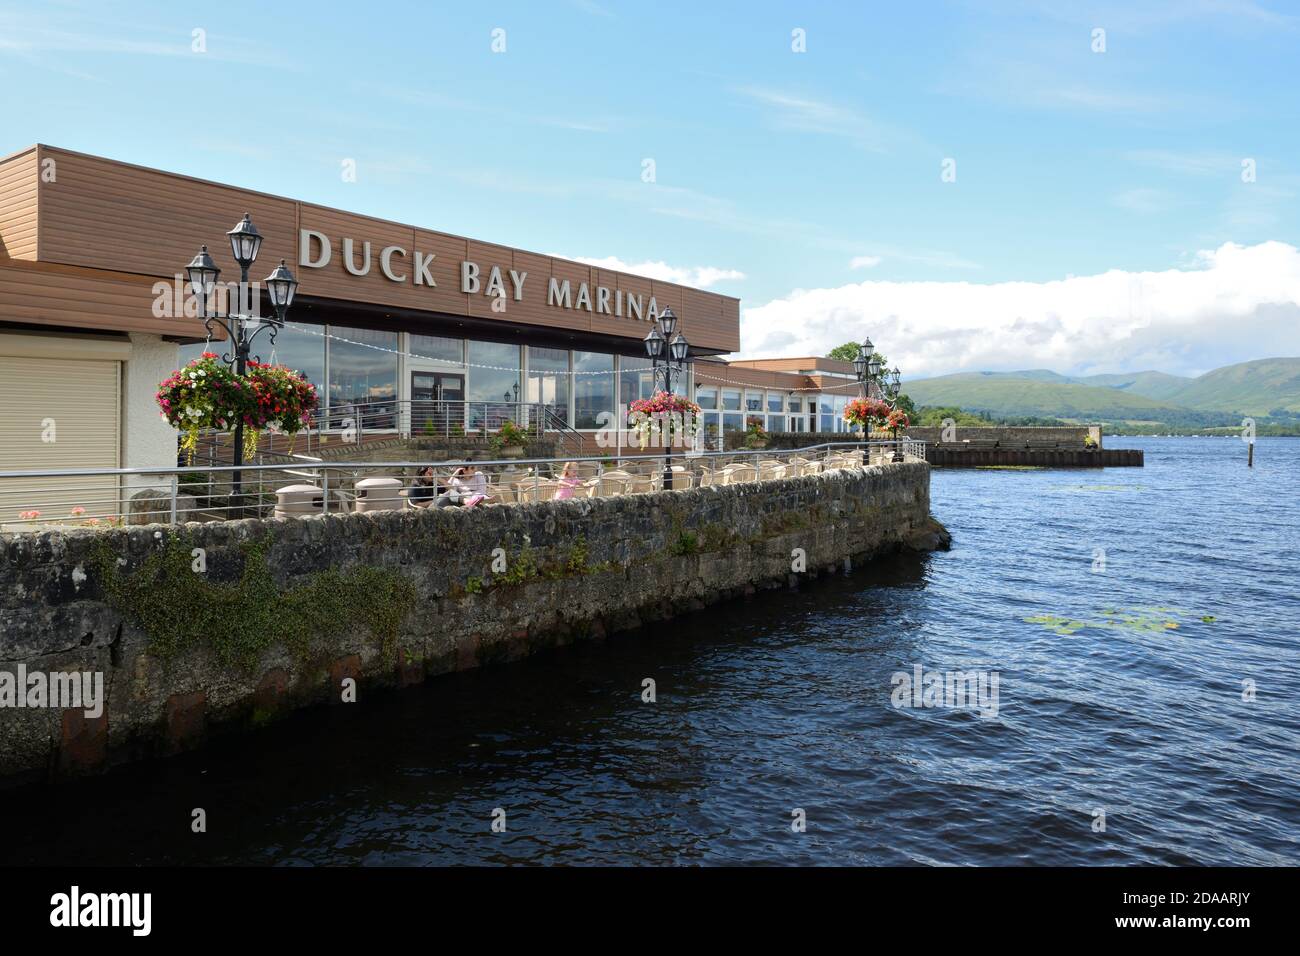 The Duck Bay Marina Hotel restaurant outdoor seating area overlooking Loch Lomond, Scotland, UK, Europe Stock Photo